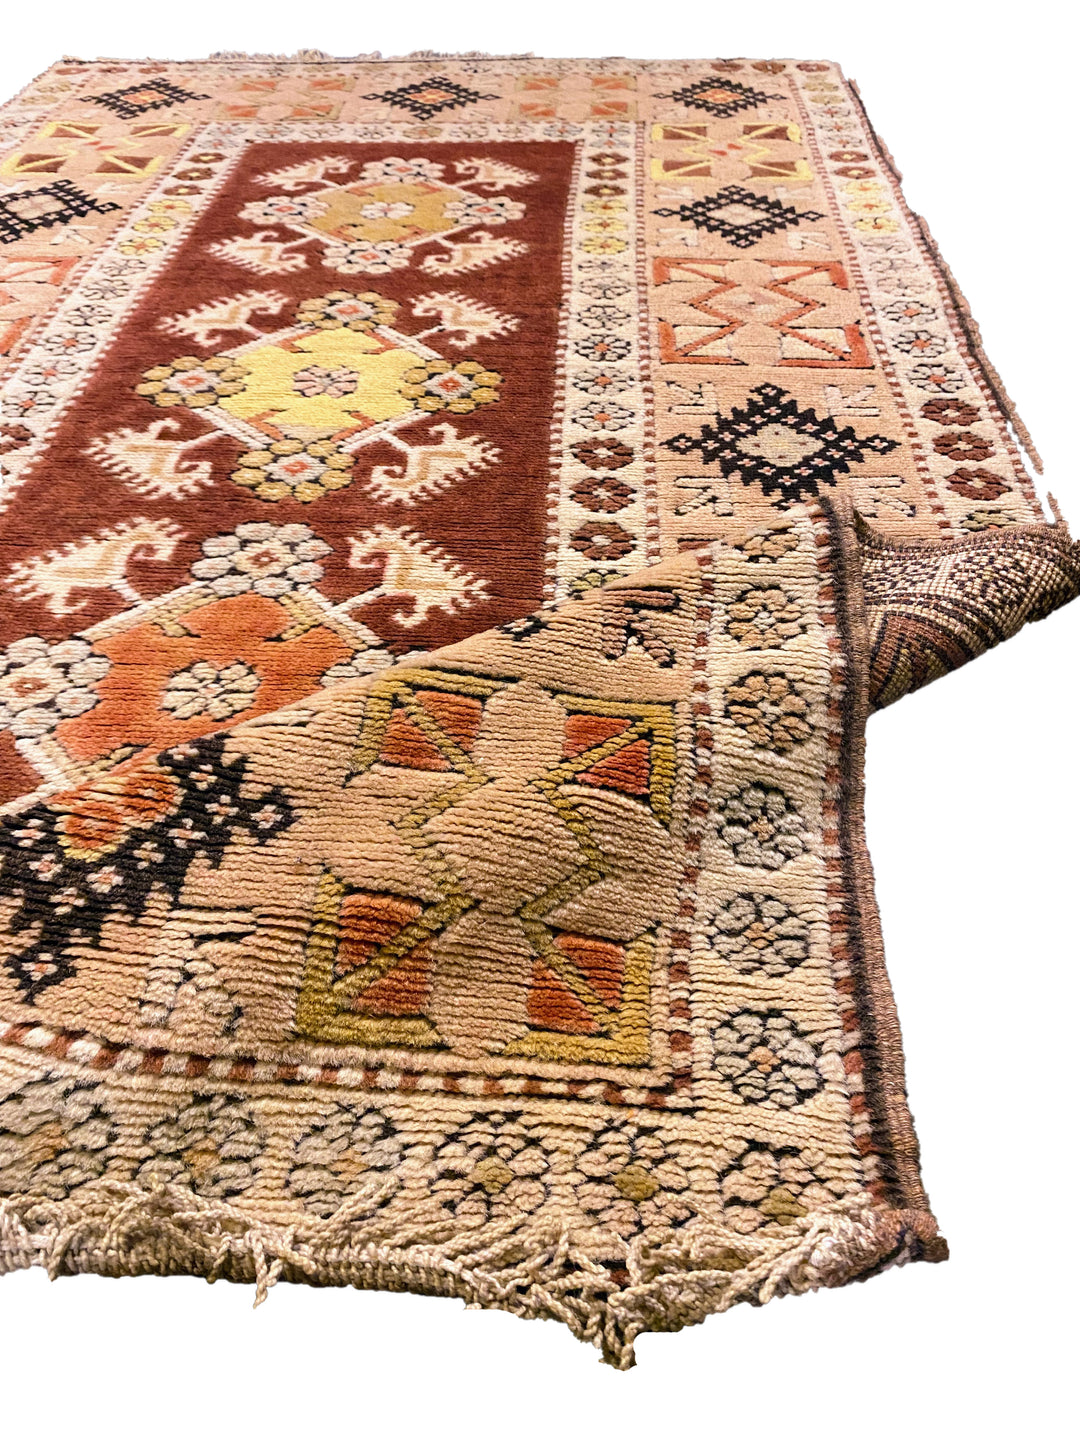 Esme - Size: 5.4 x 3.2 - Imam Carpet Co